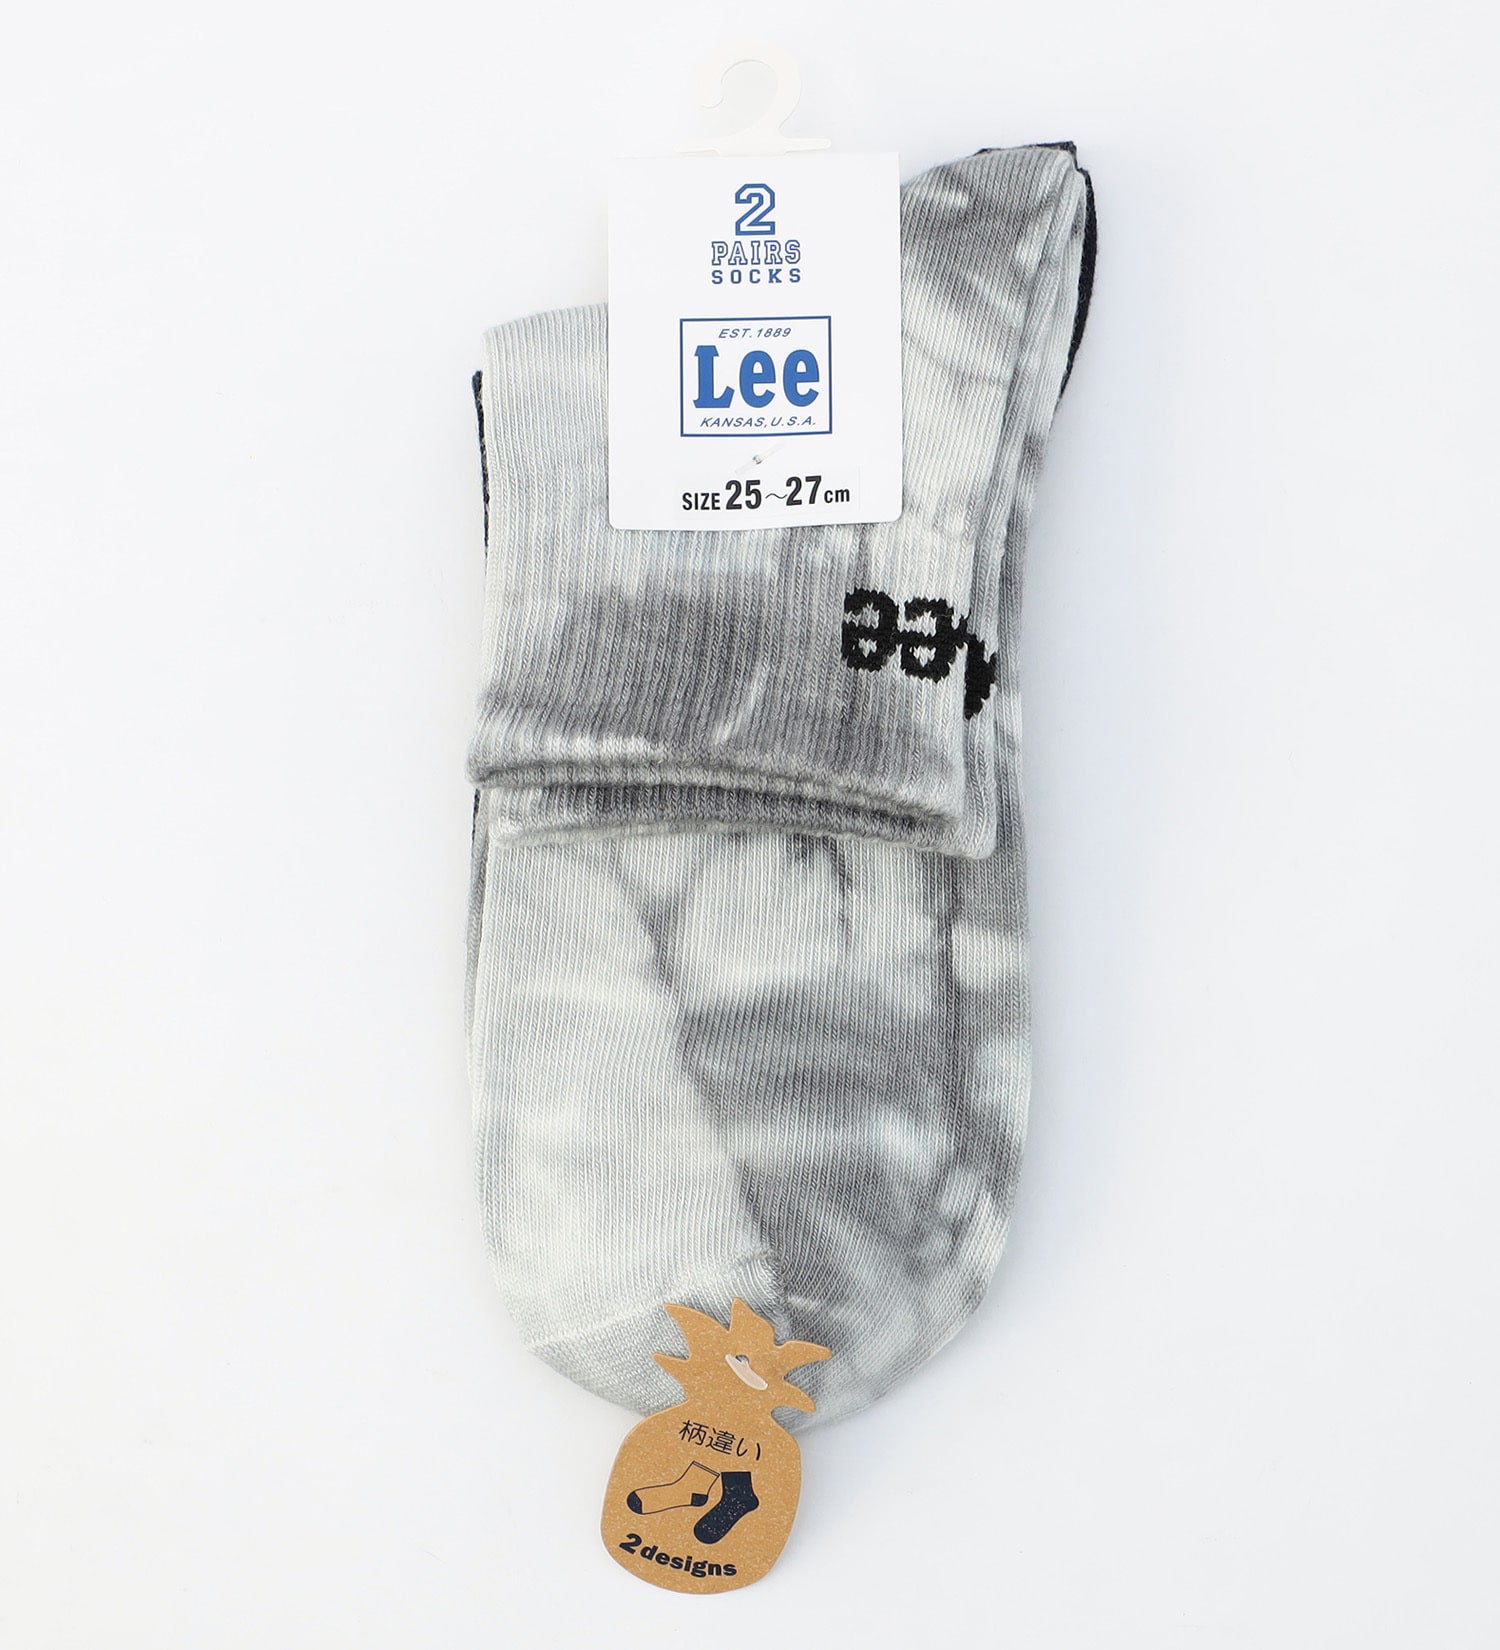 Lee(リー)のLee メンズソックス 2足組 タイダイ|ファッション雑貨/靴下/メンズ|その他